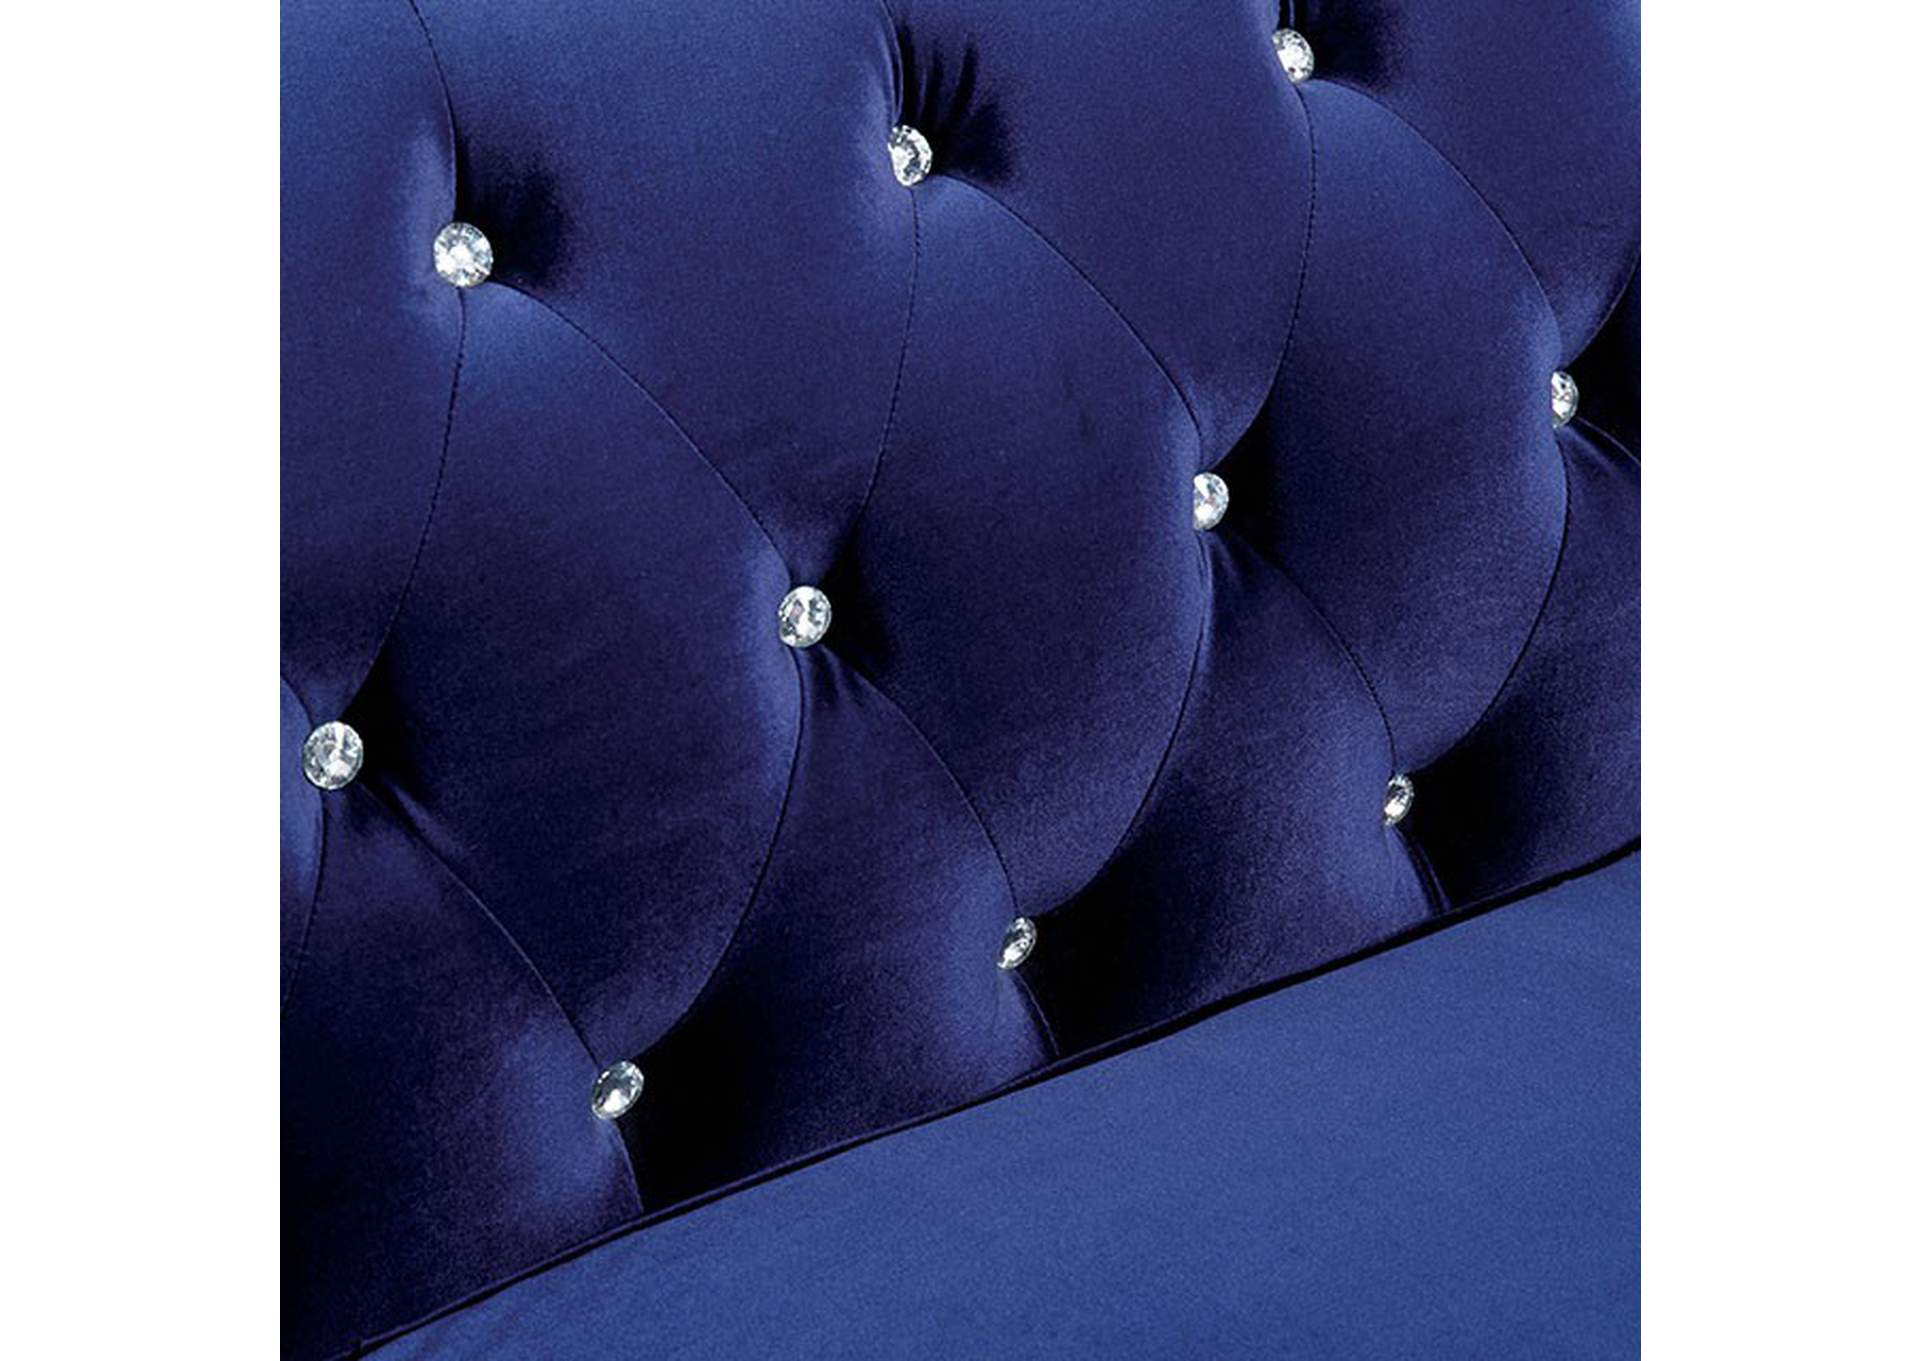 Jolanda Love Seat,Furniture of America